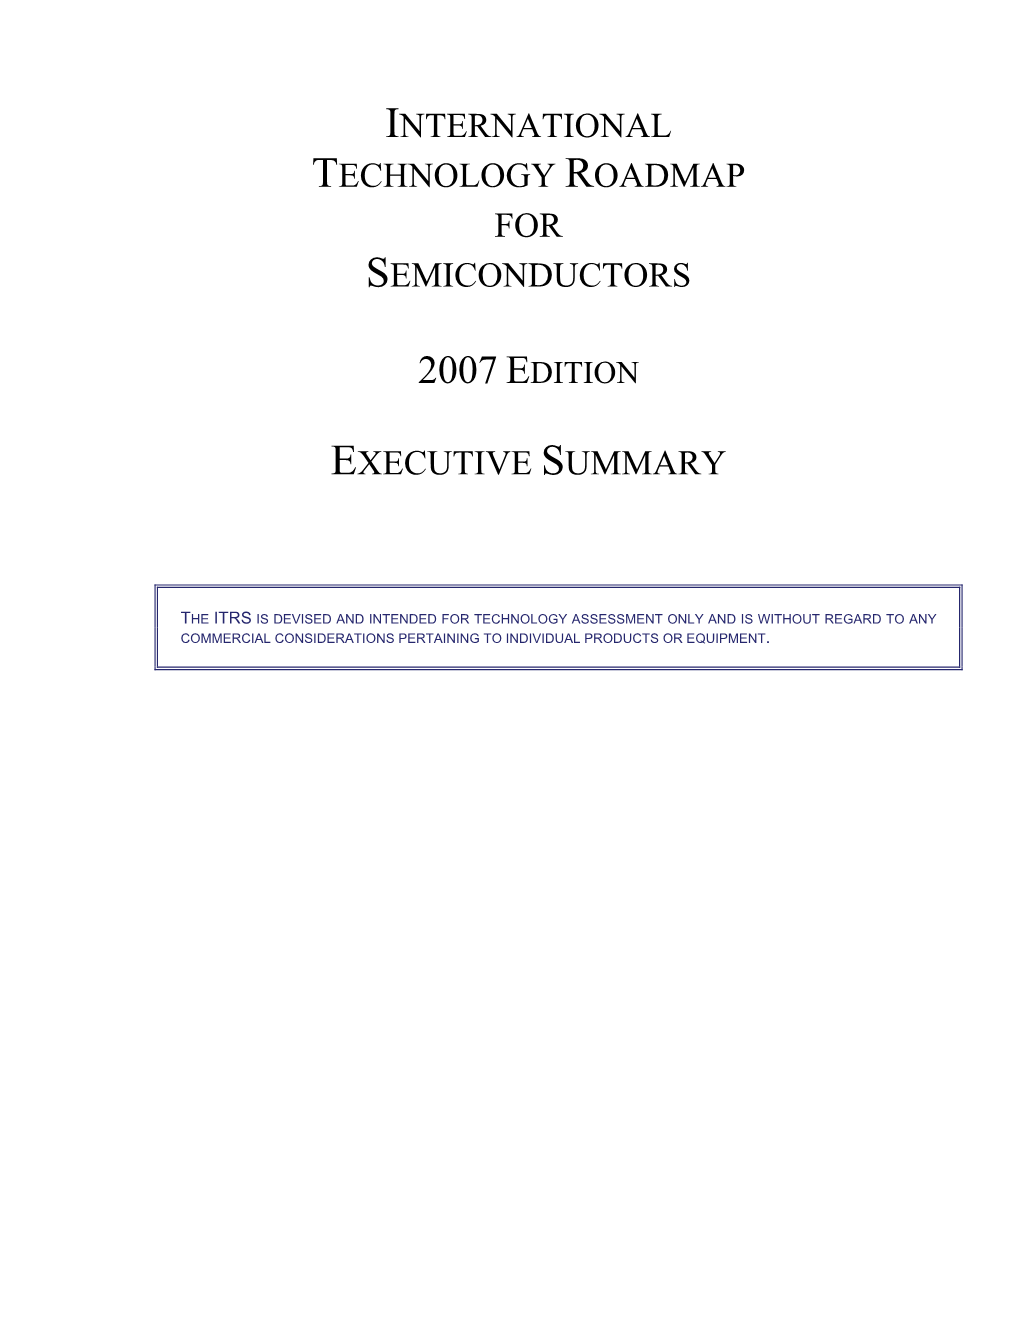 International Technology Roadmap for Semiconductors, 2007 Edition